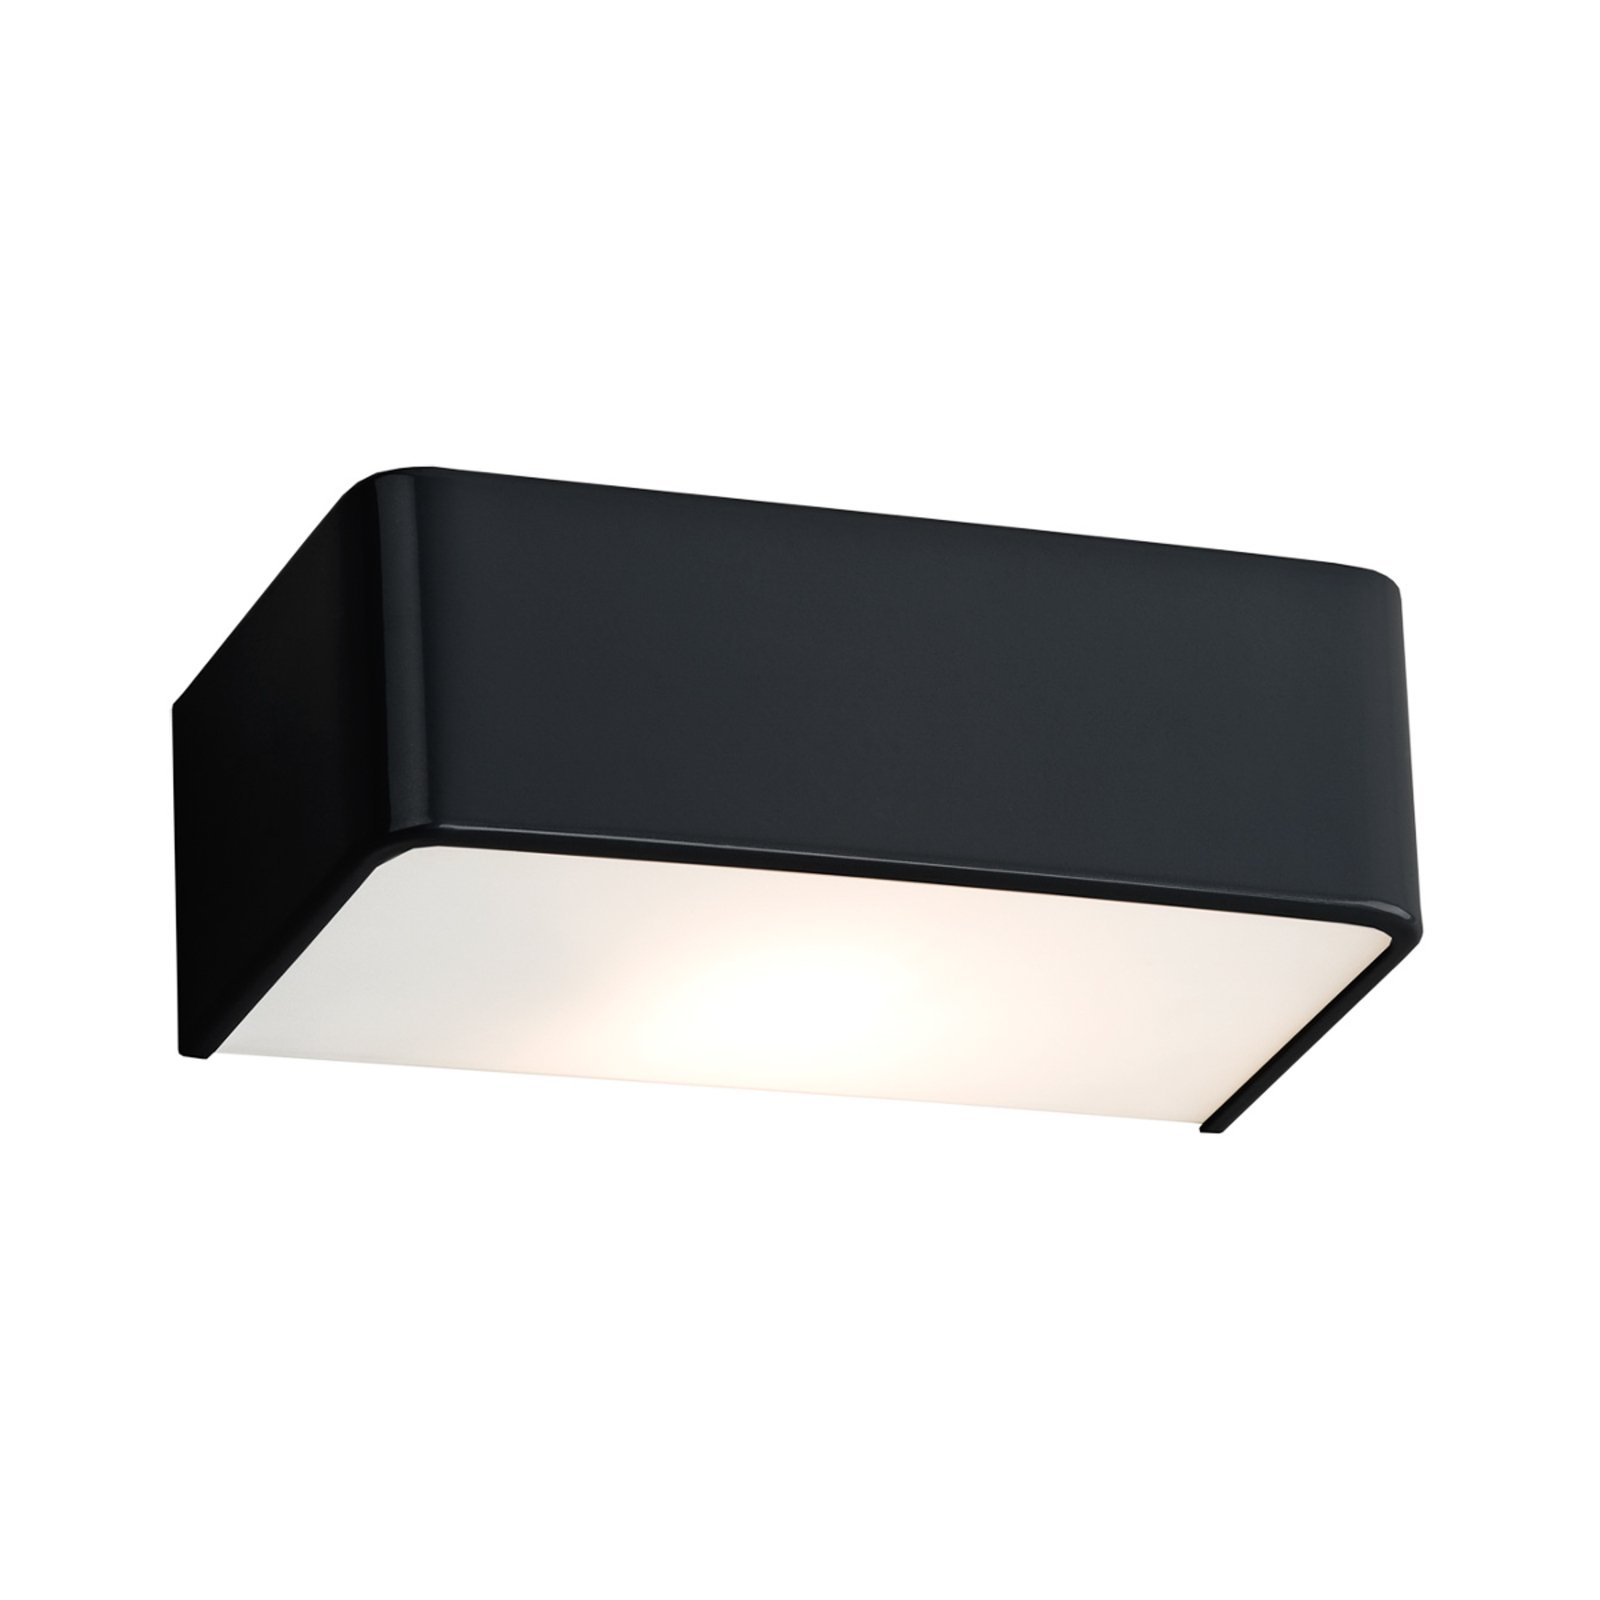 Rauma wall light, black, 20 cm wide